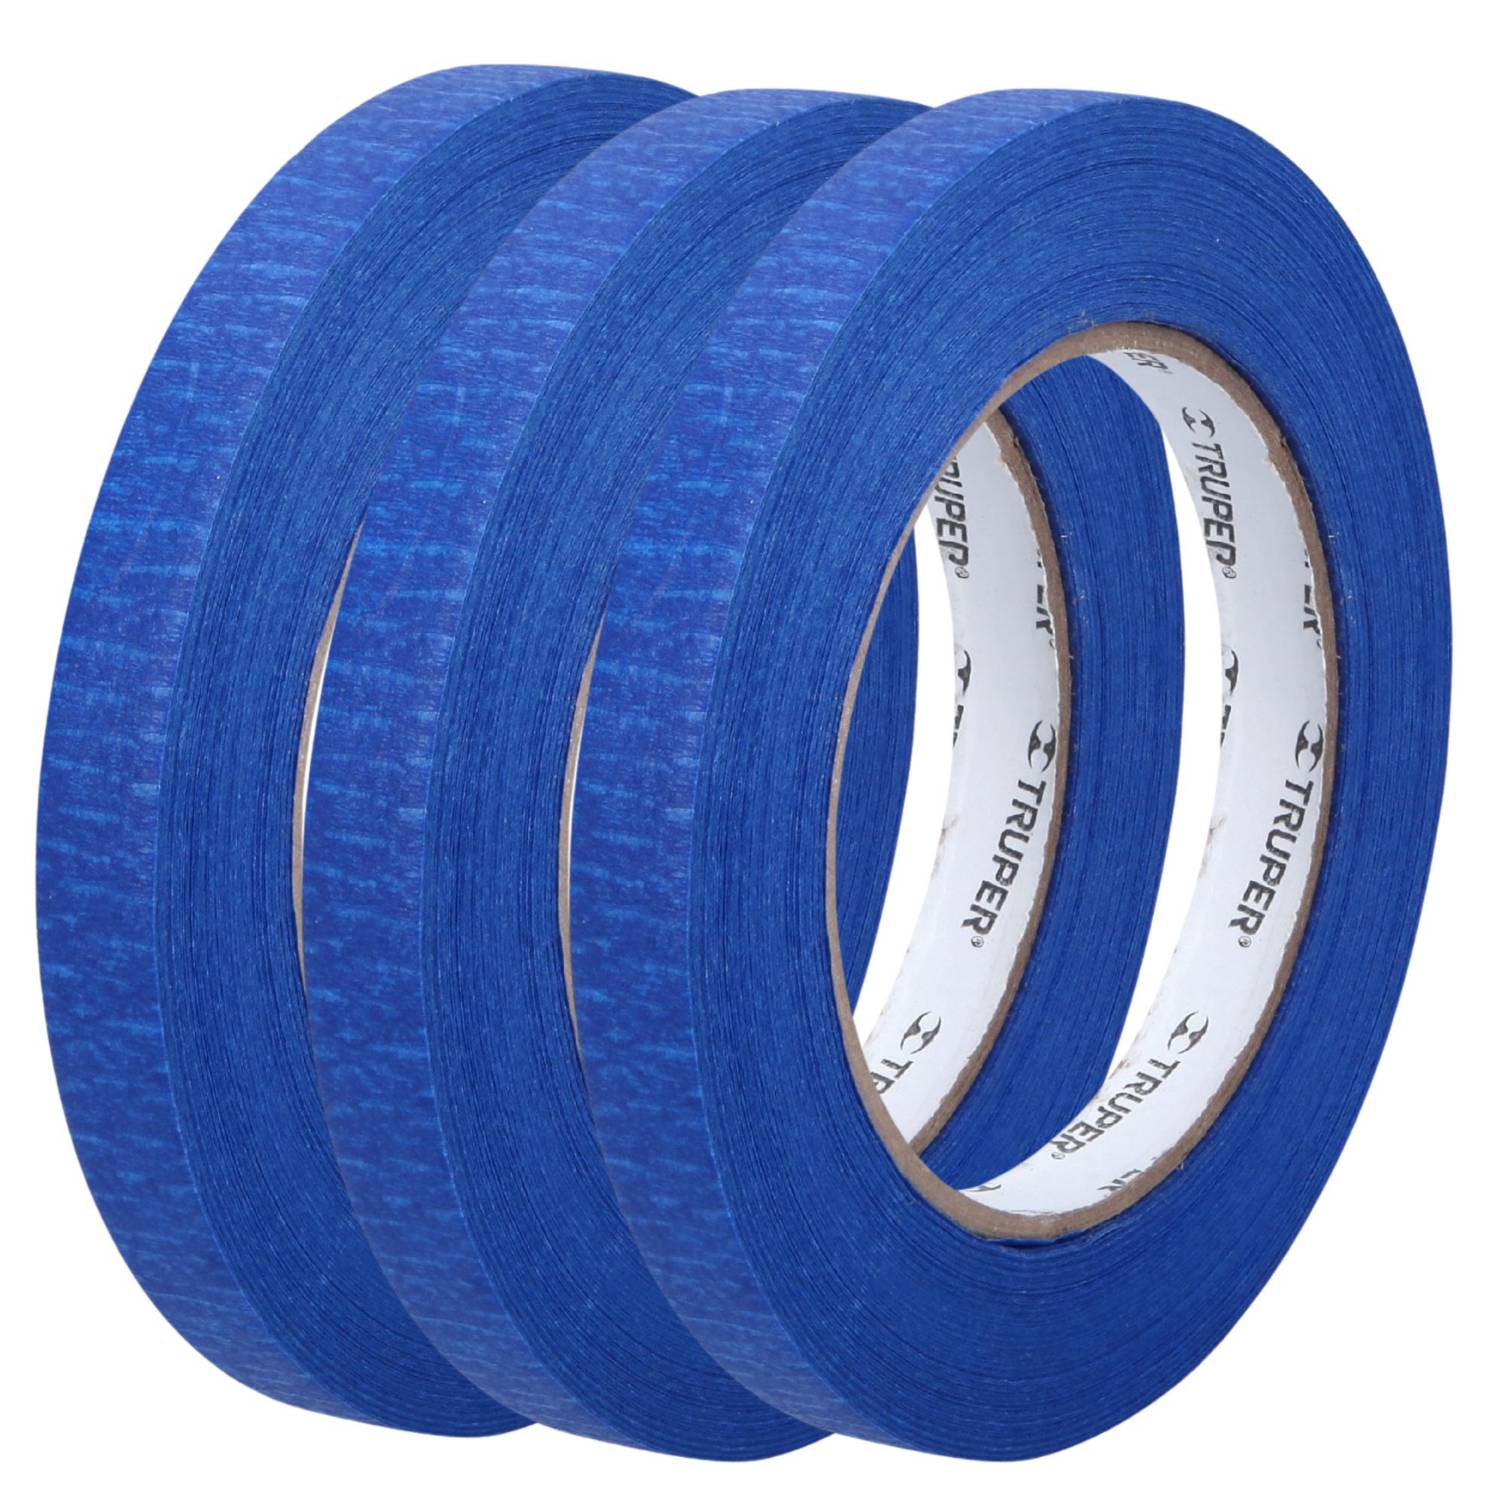 Cinta masking tape azul de 2' x 50 m, Truper